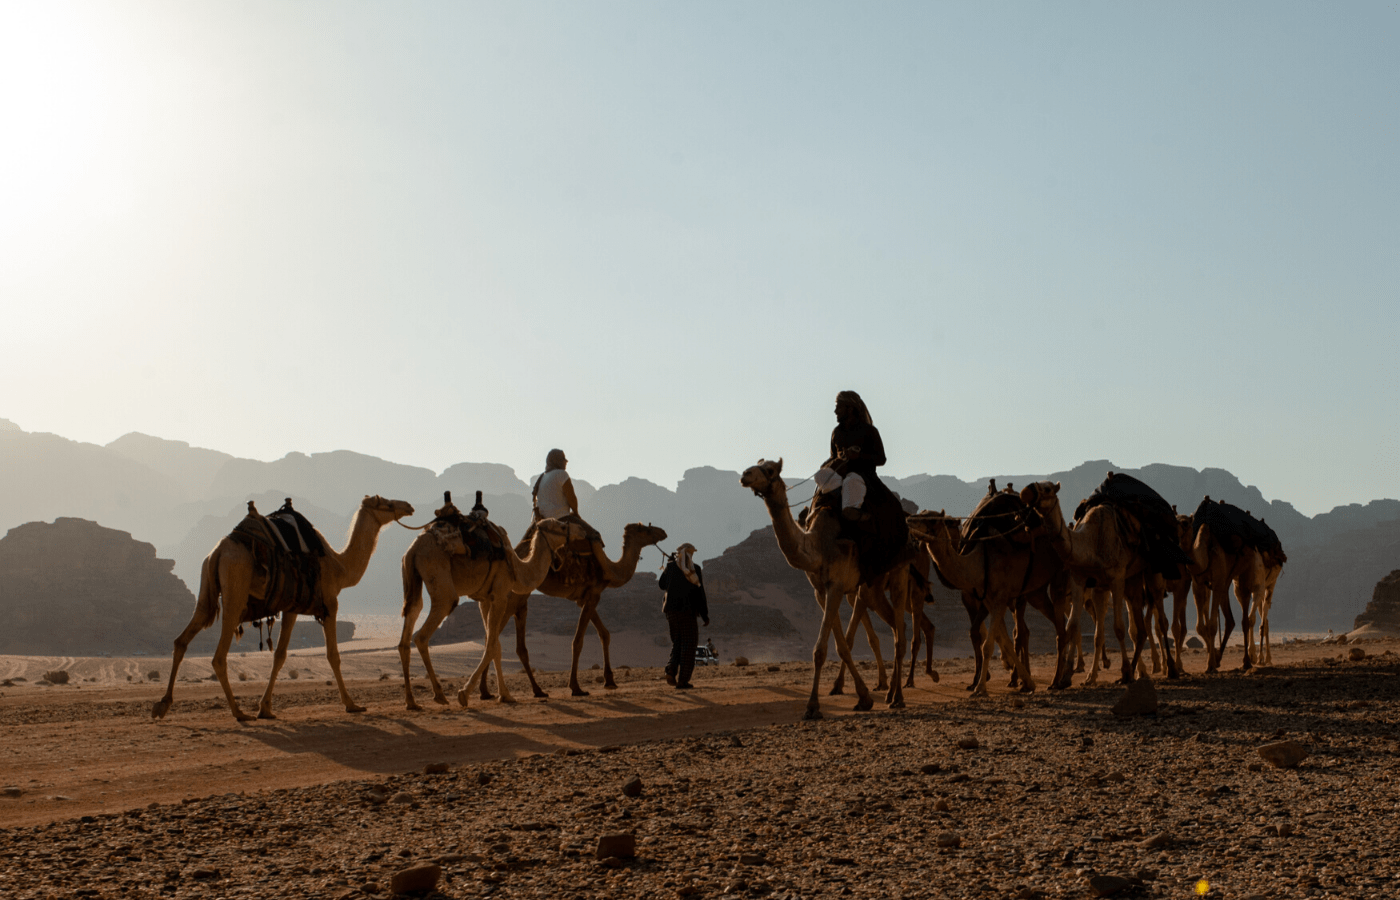 Camel riding in the desert of Wadi Rum, Jordan